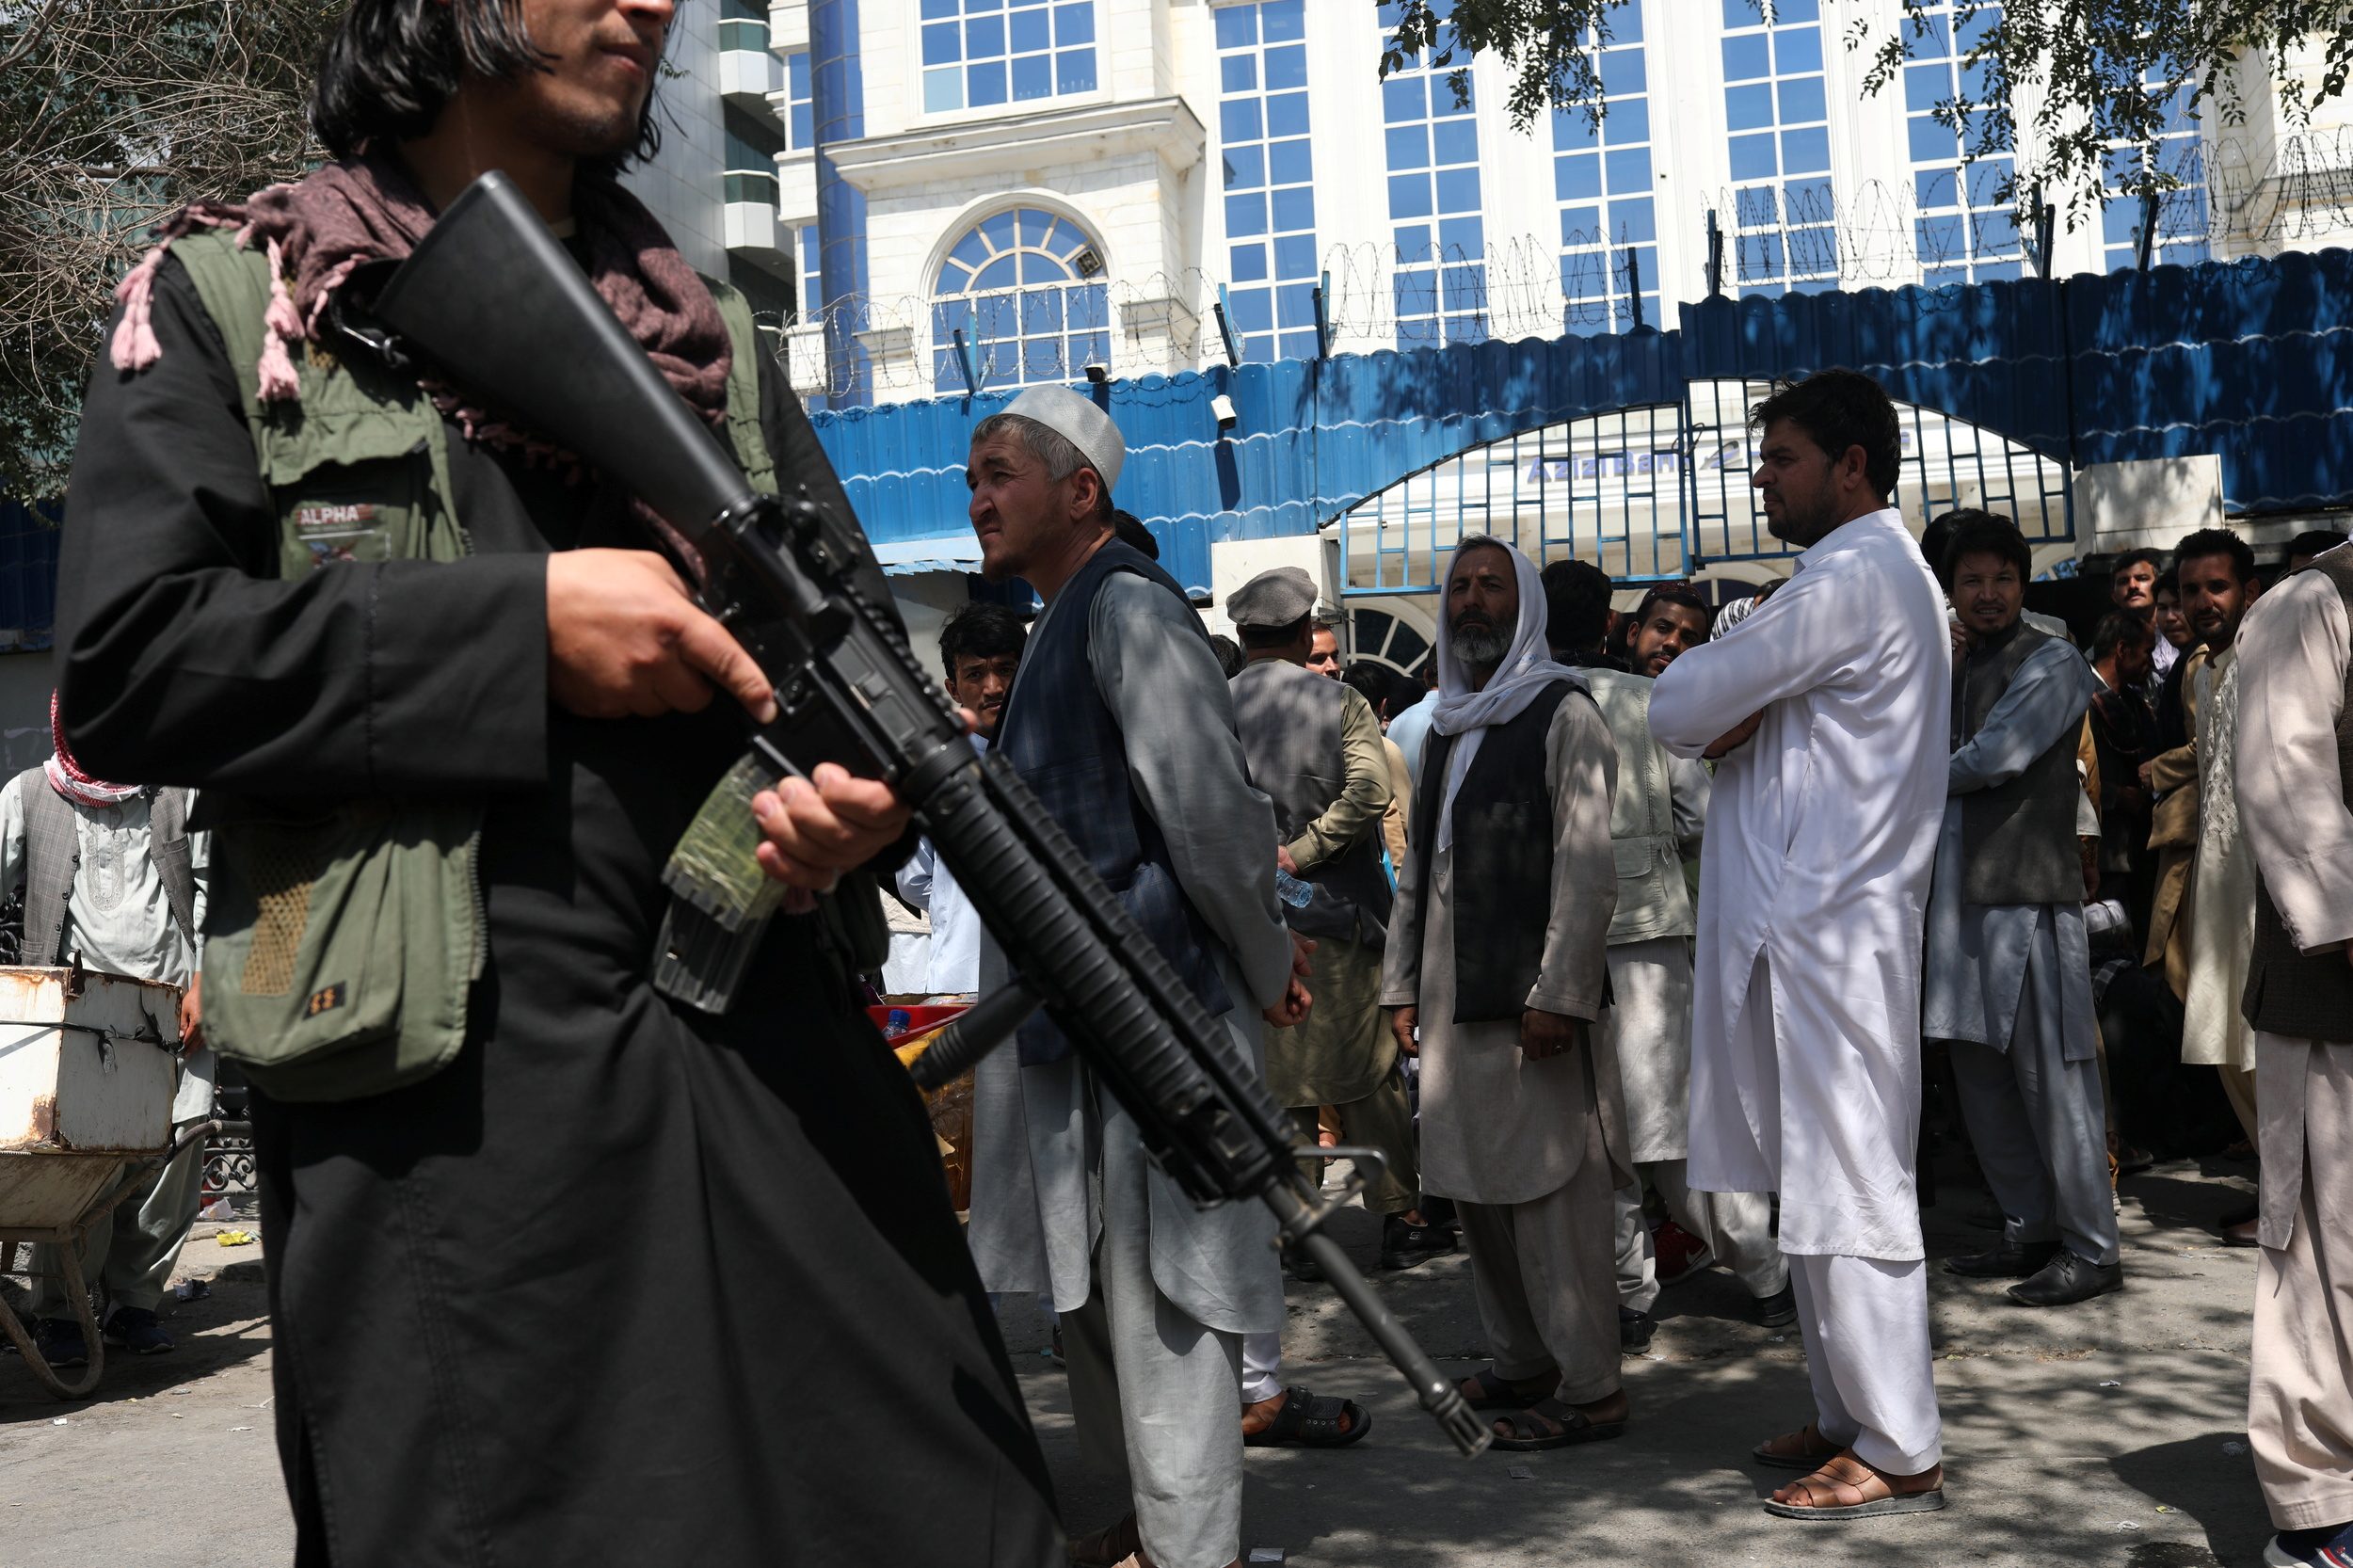 Taliban tells Berlin it will welcome German companies, aid